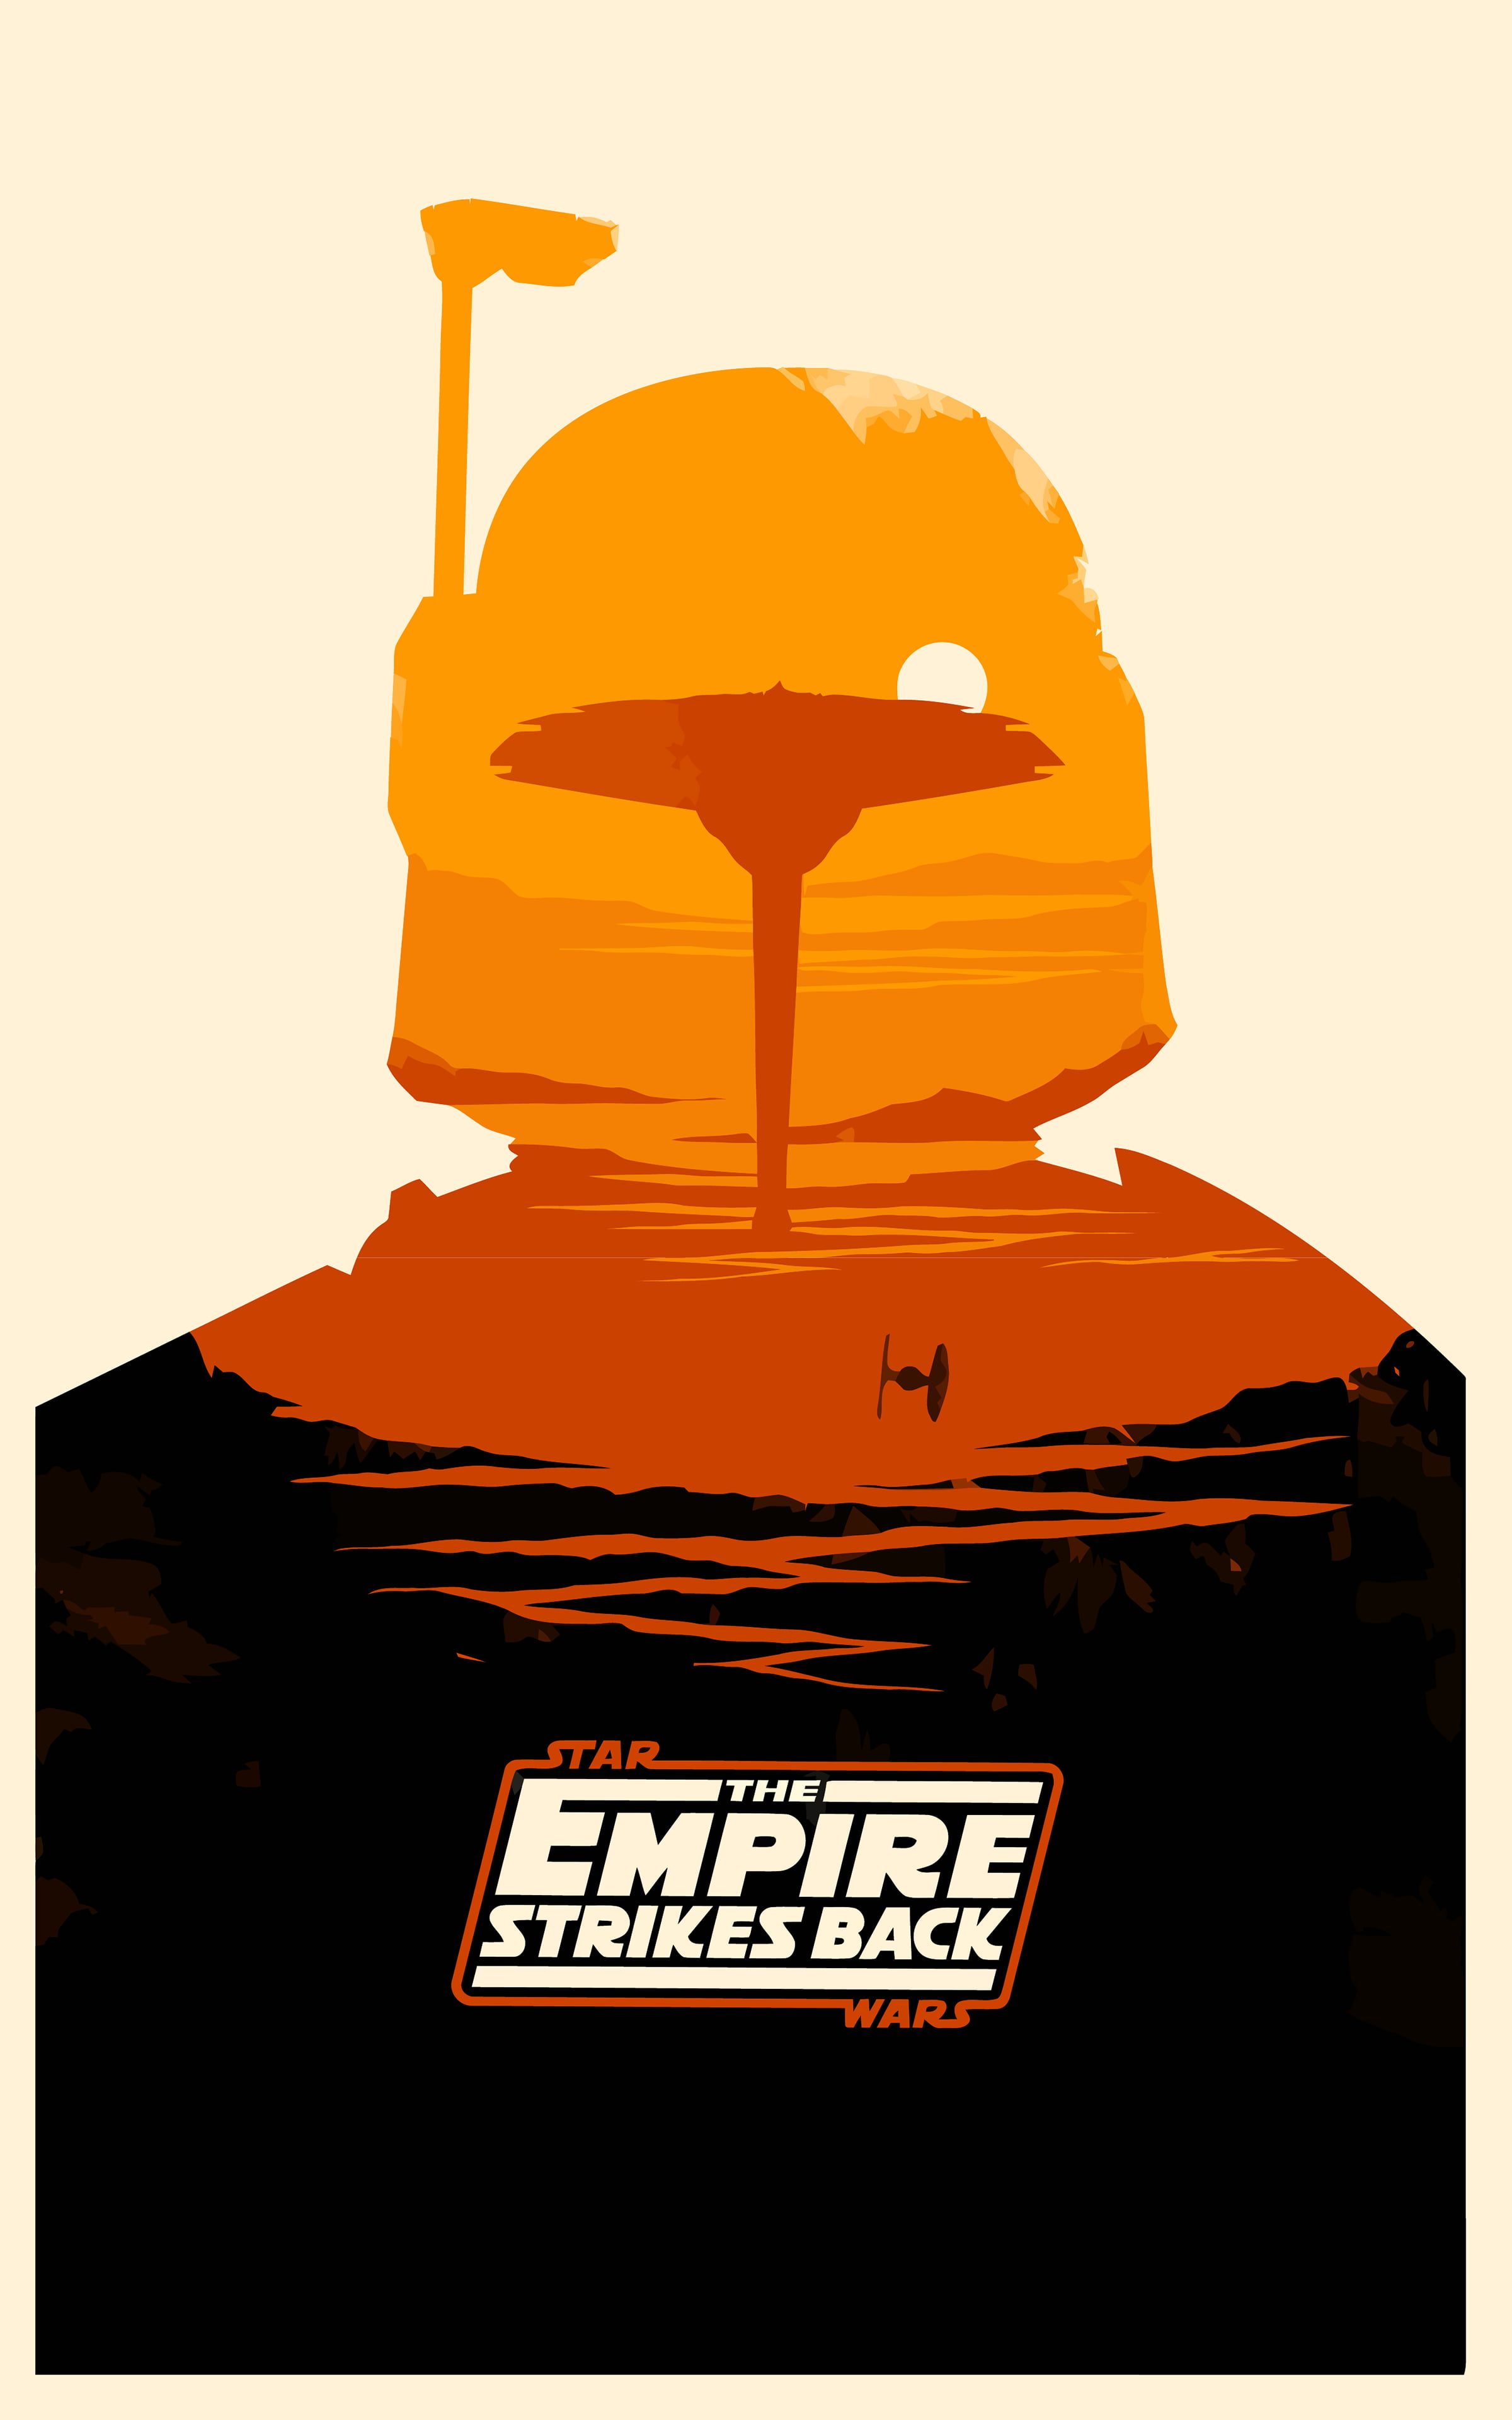 Star Wars The Empire Strikes Back poster, Star Wars: Episode V - The Empire Strikes Back, Star Wars, movies, minimalism